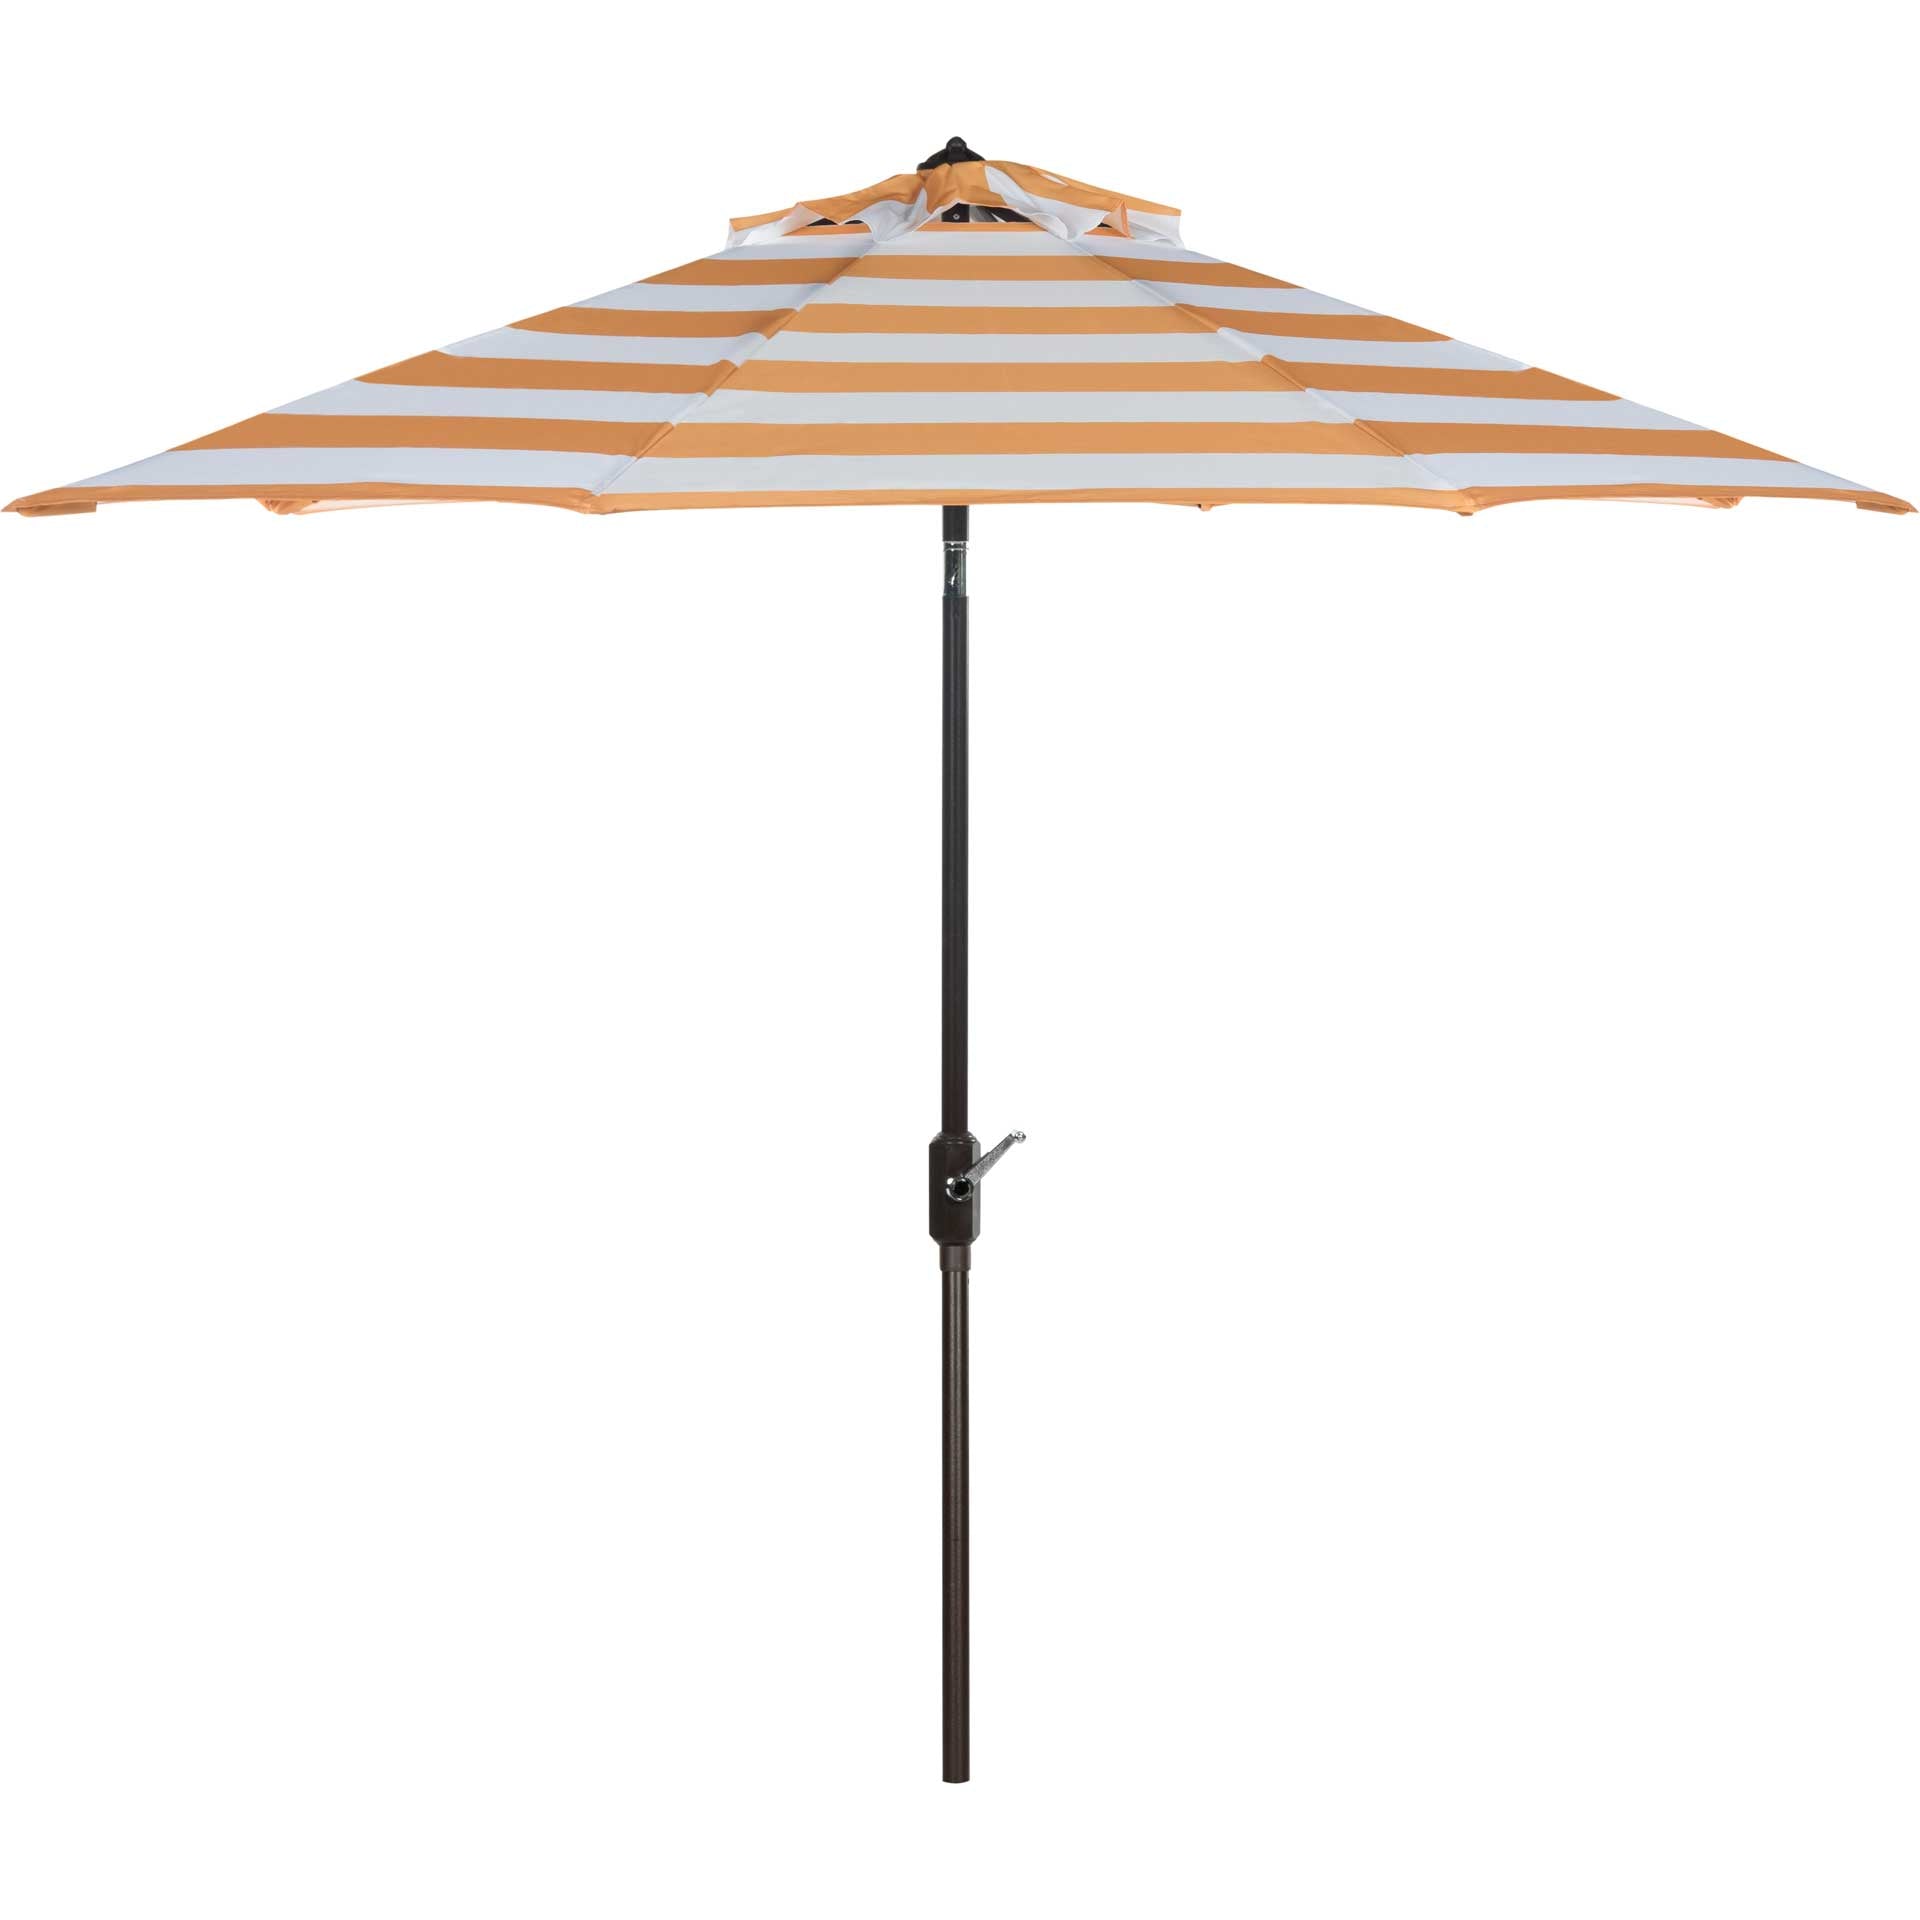 Irvin Uv Resistant Auto Tilt Umbrella Orange/White